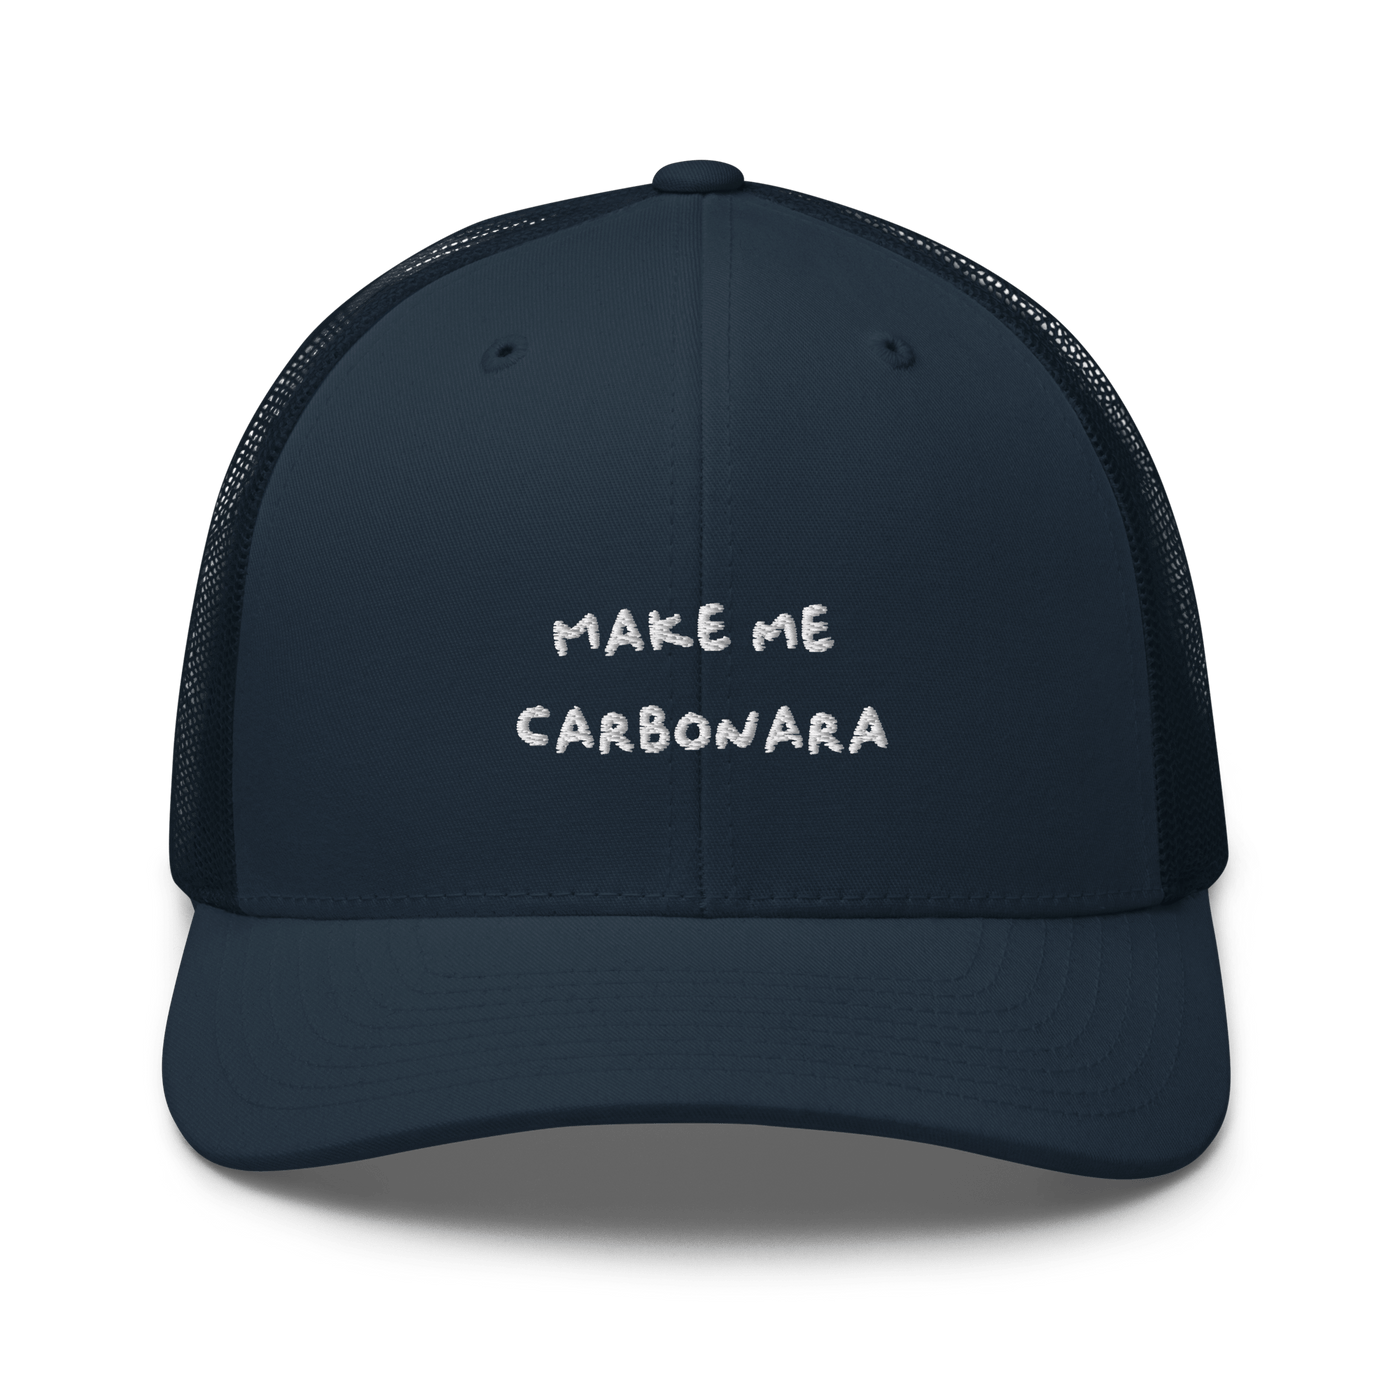 Make me Carbonara Trucker Cap - Navy - - Just Another Cap Store